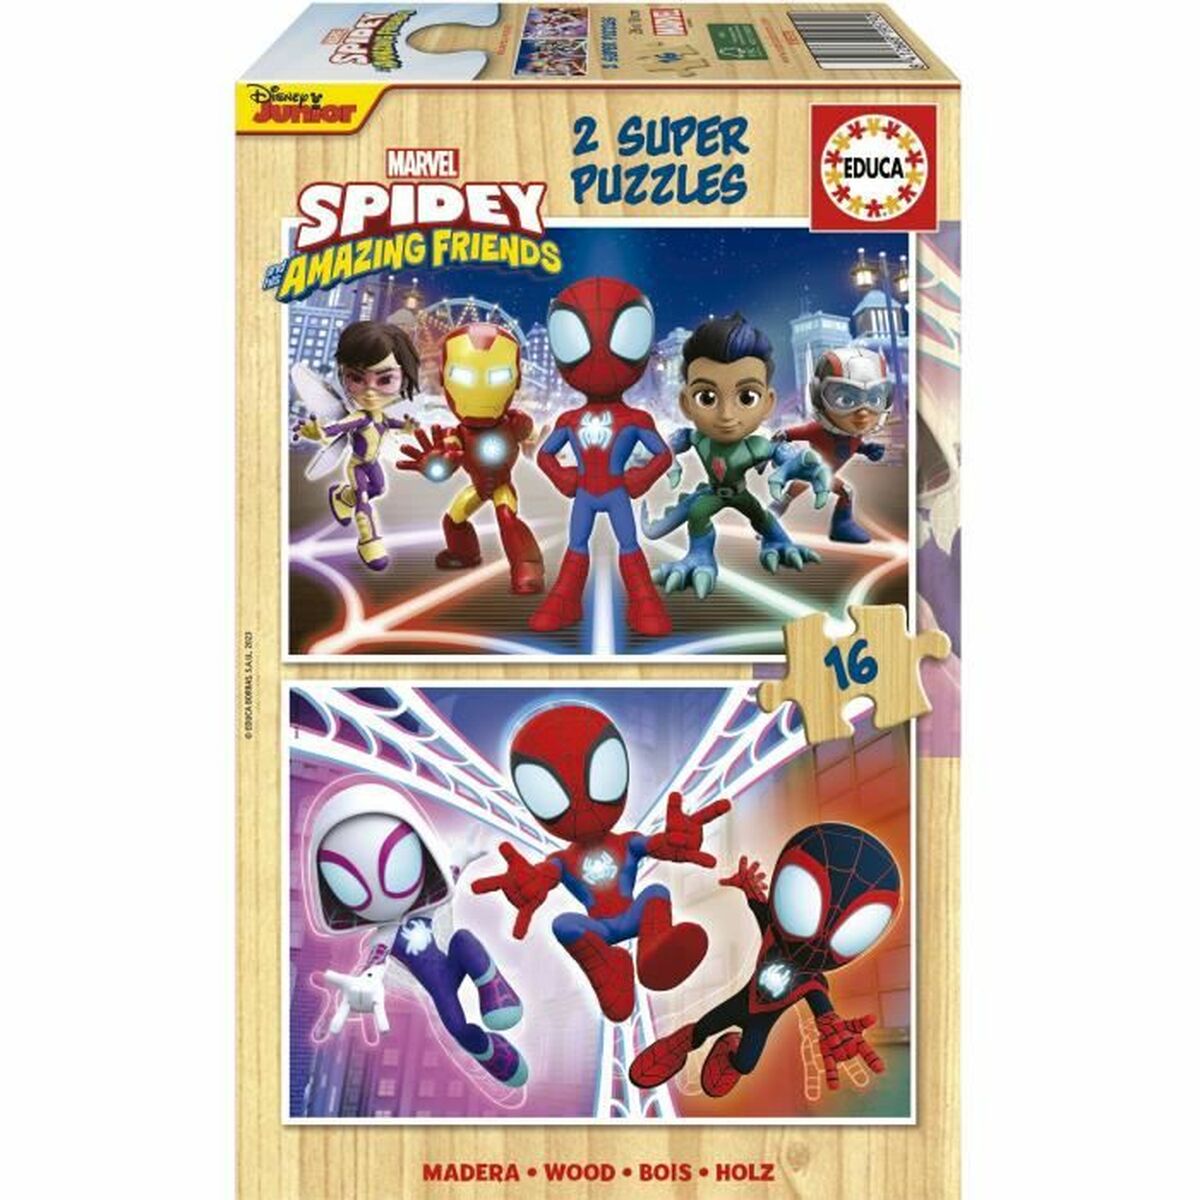 Spiderman -puzzle supercolor 24 pieces maxi, puzzle